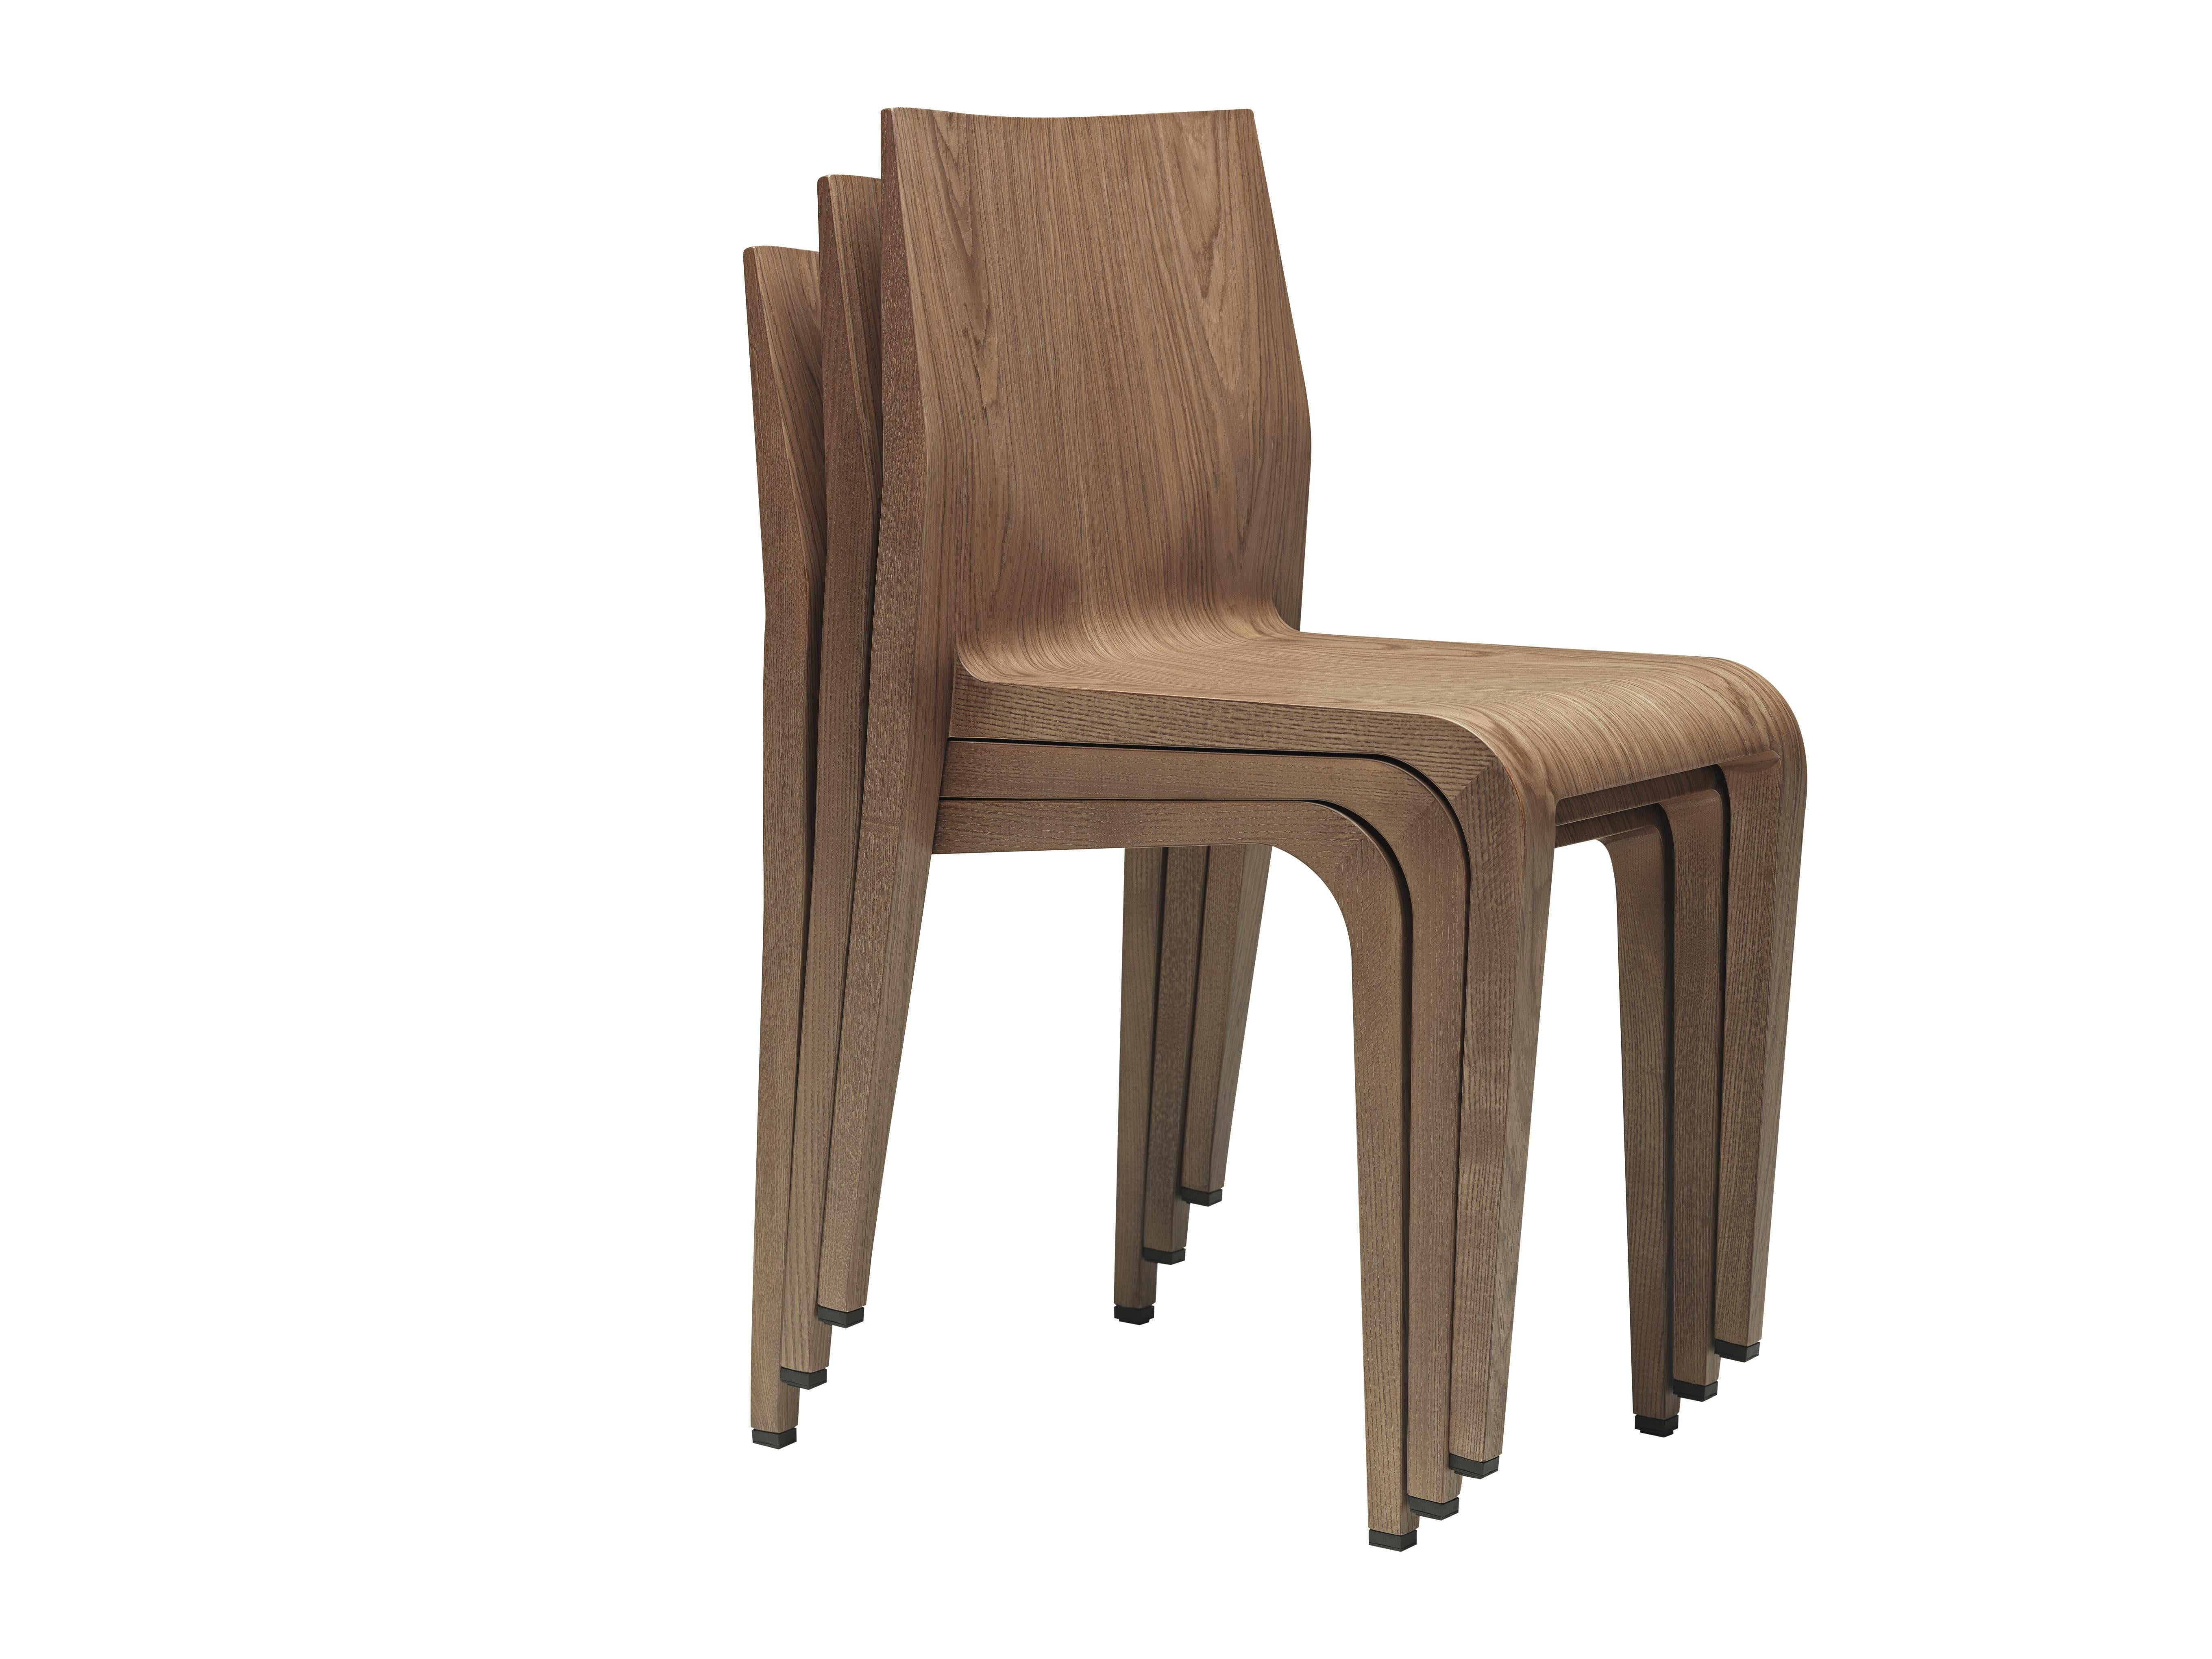 Alias 301 Laleggera Chair in Oak Canaletto Walnut Wood by Riccardo Blumer In New Condition For Sale In Brooklyn, NY